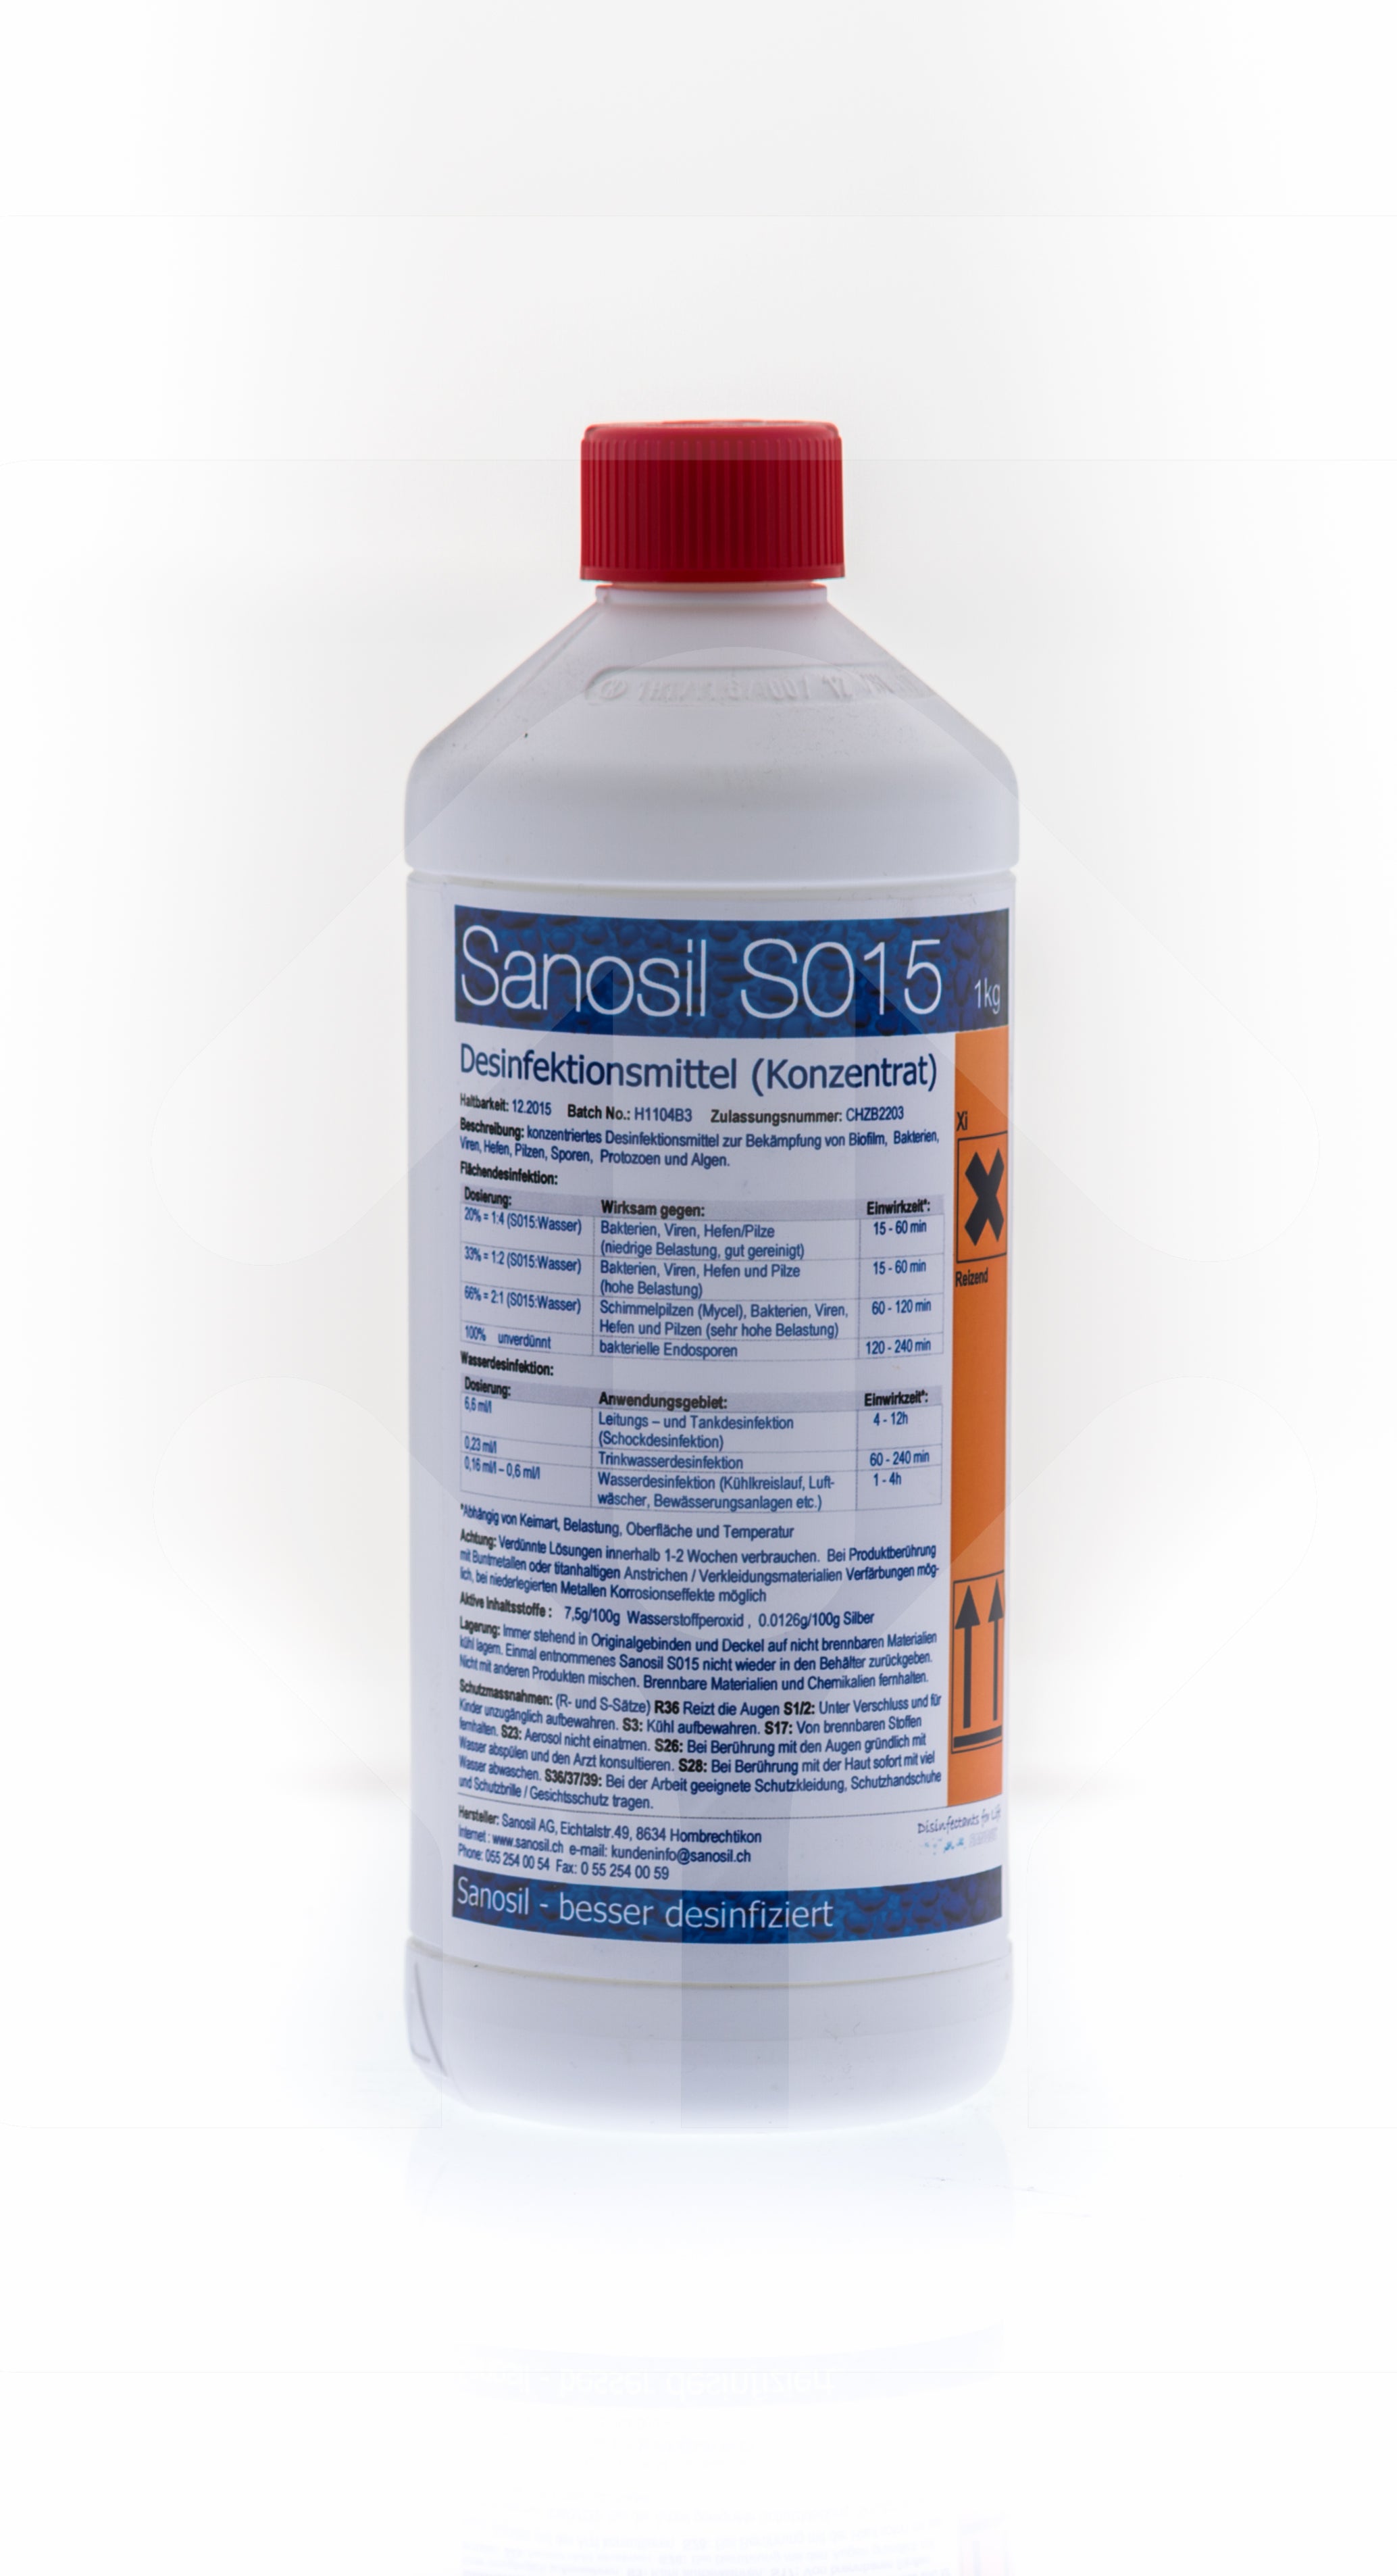 Sanosil S015 Desinfektionsmittel 1L 0